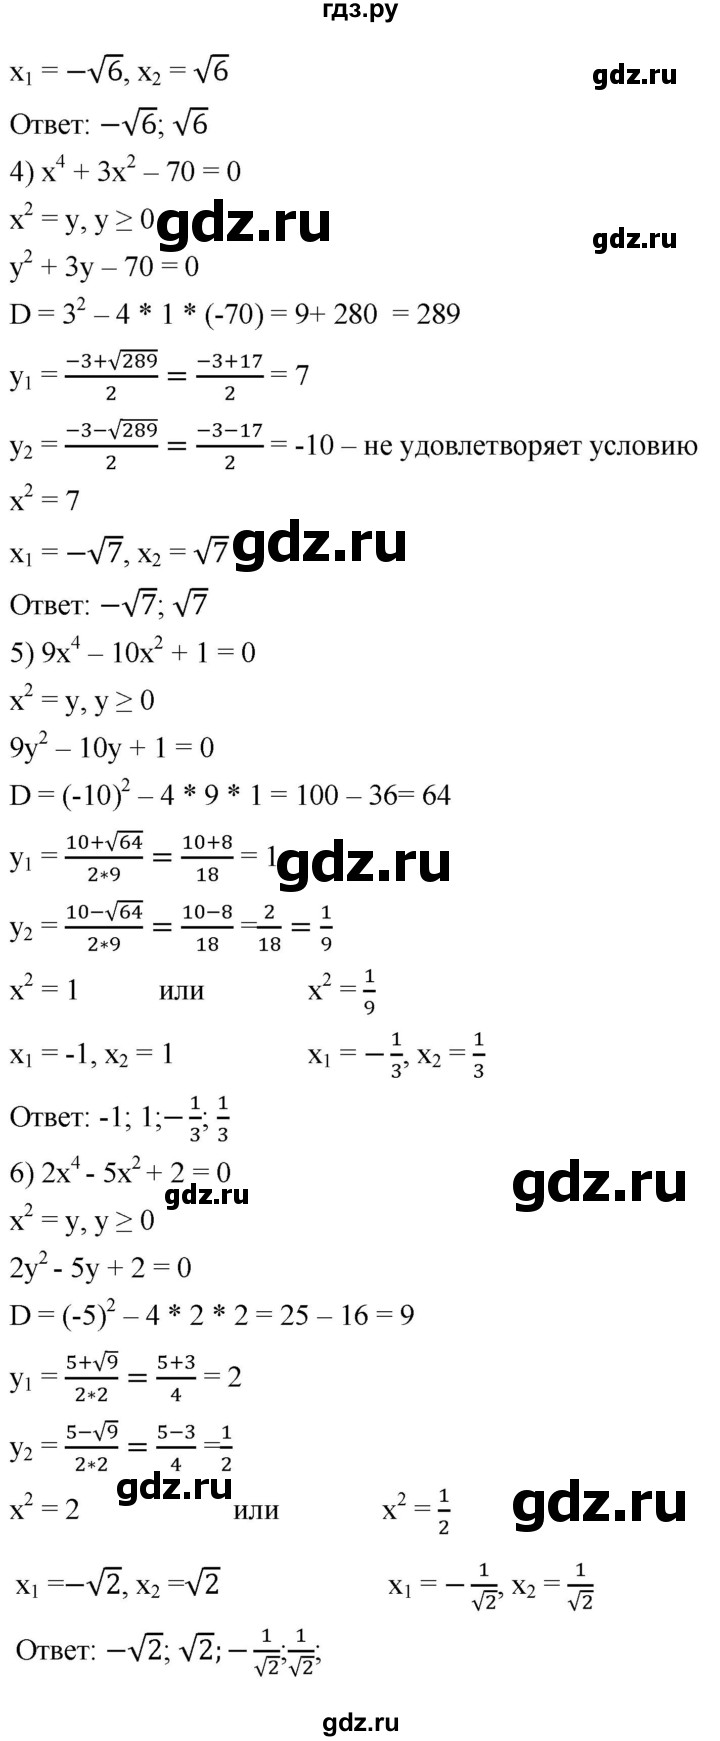 ГДЗ по алгебре 8 класс  Мерзляк   номер - 776, Решебник к учебнику 2019